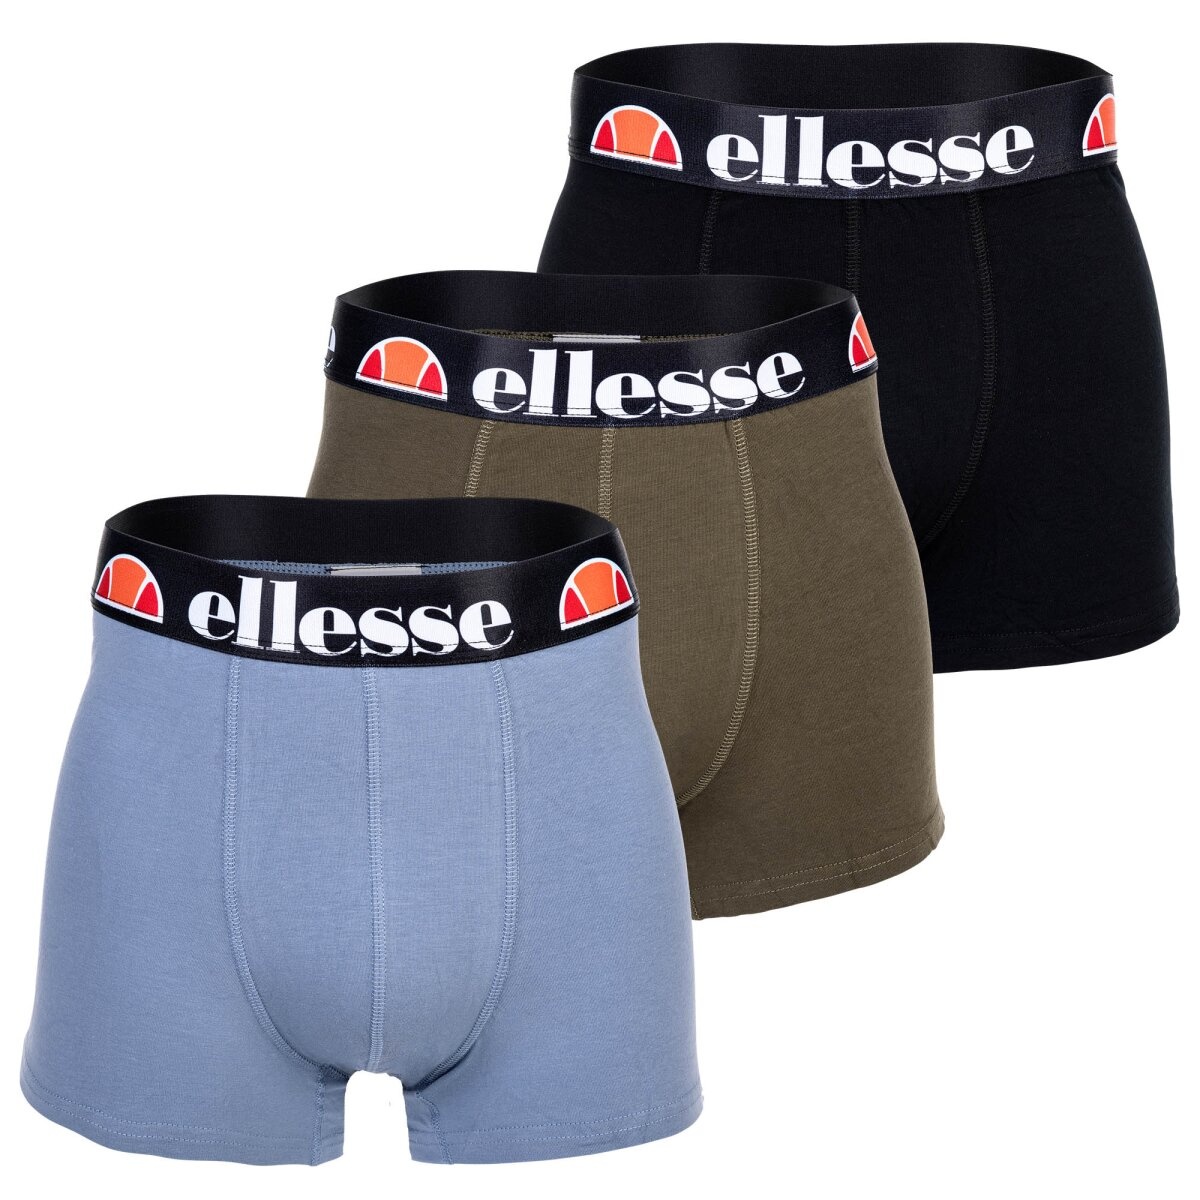 ellesse Herren Boxer Shorts GRILLO, 3er Pack - Trunks, Logo, Cotton Stretch Schwarz/Grün/Blau L